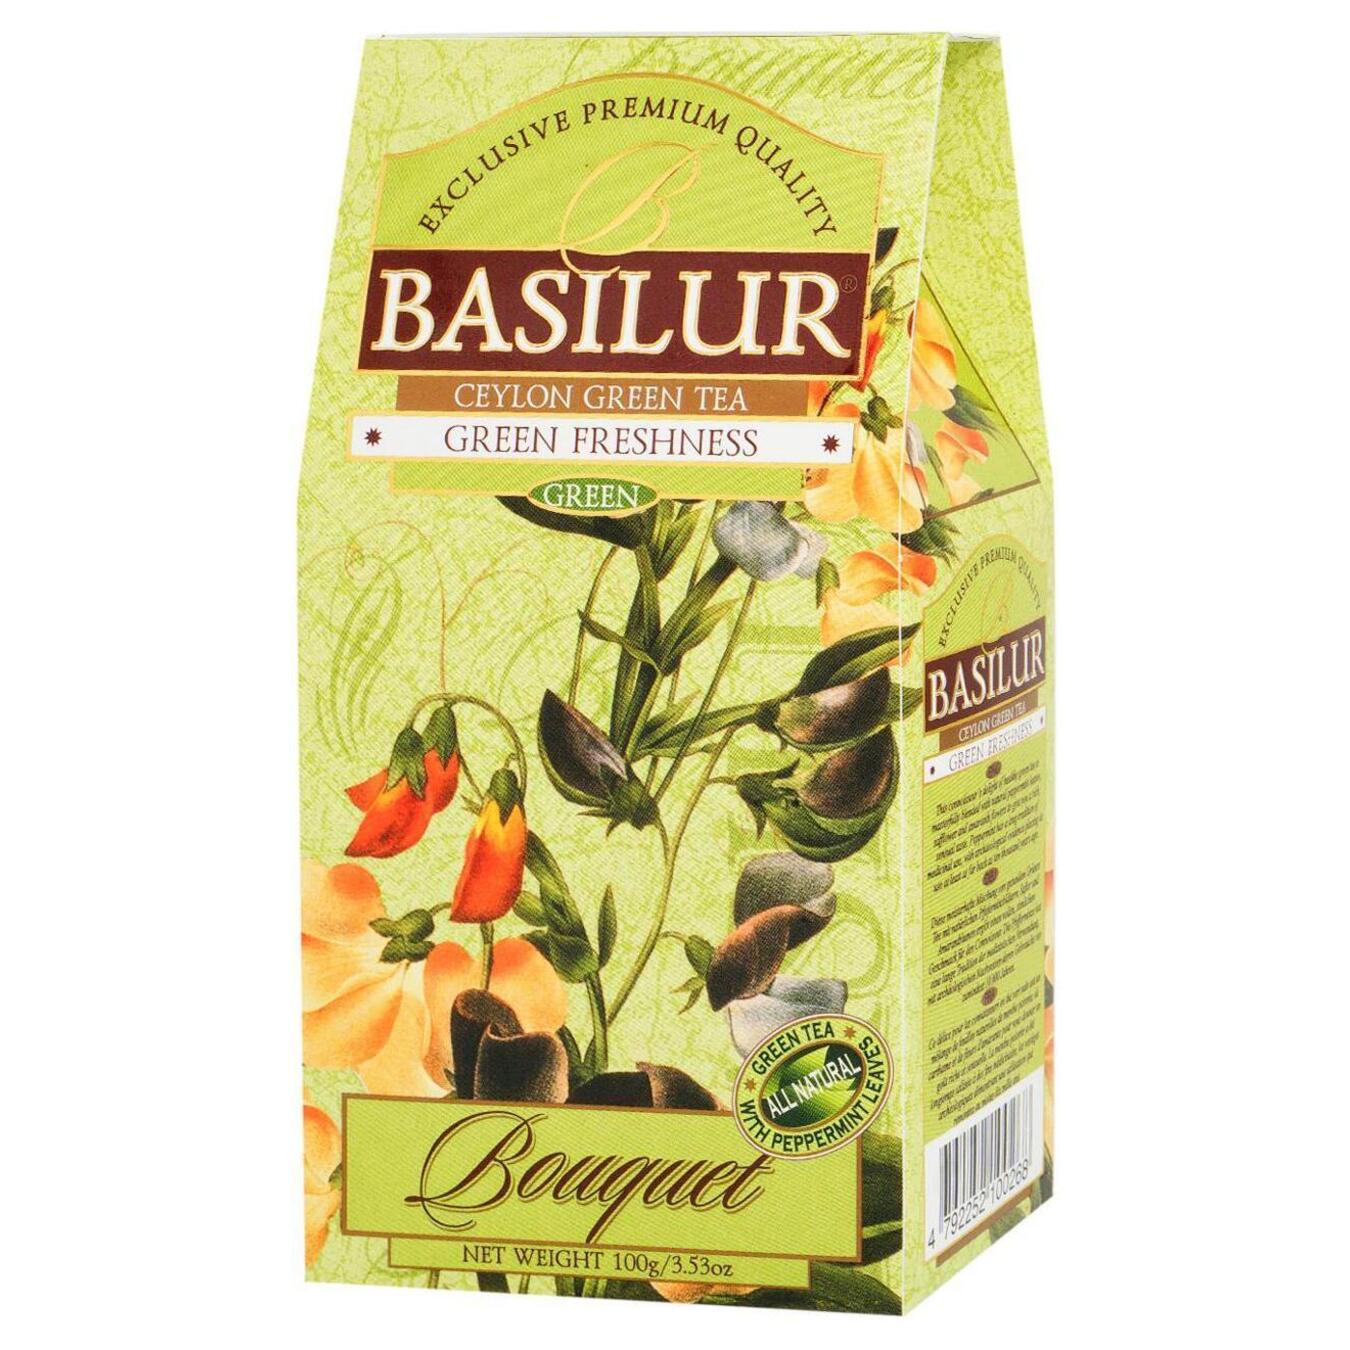 Green tea Basilur collection Bouquet Green freshness 100g cardboard